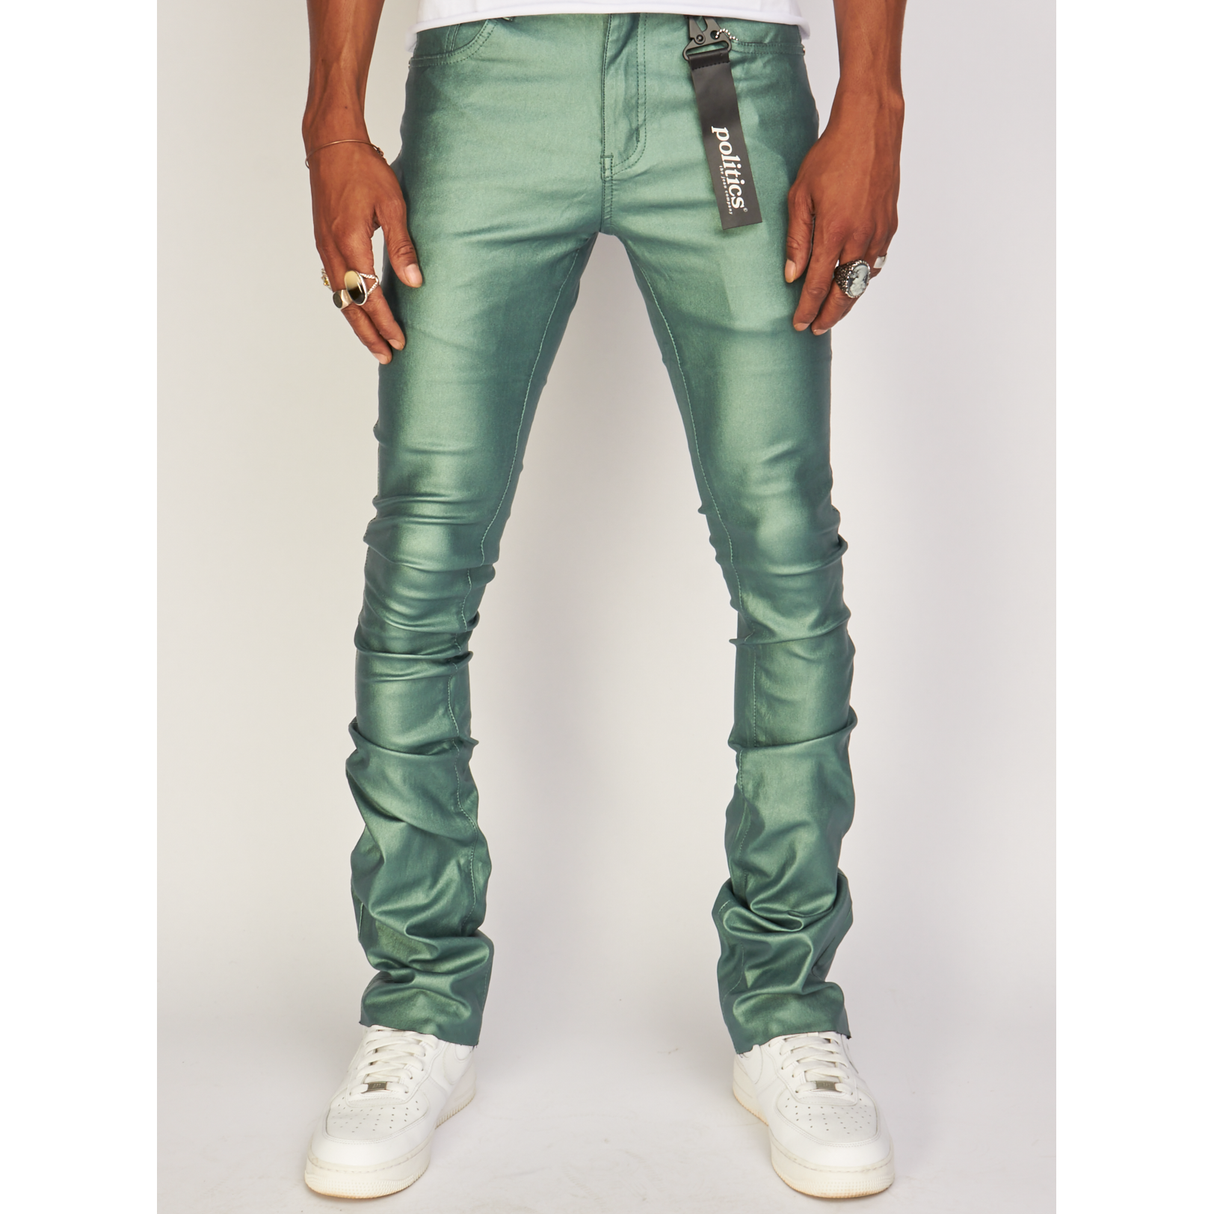 Politics Jeans - Martin - Metallic Green - 508